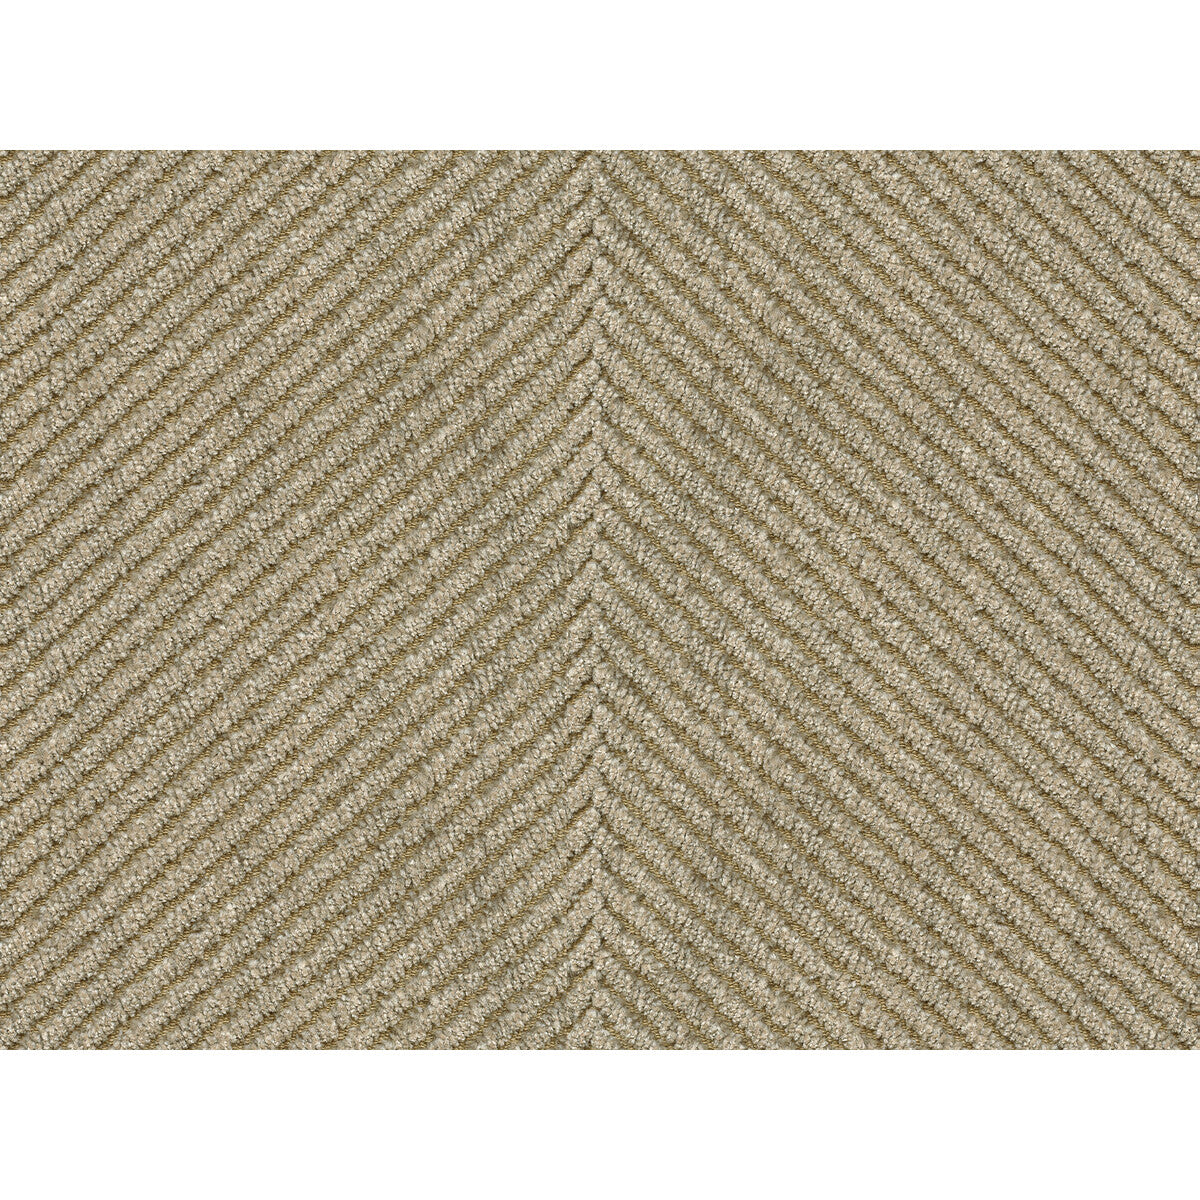 Kravet Smart fabric in 34350-16 color - pattern 34350.16.0 - by Kravet Smart